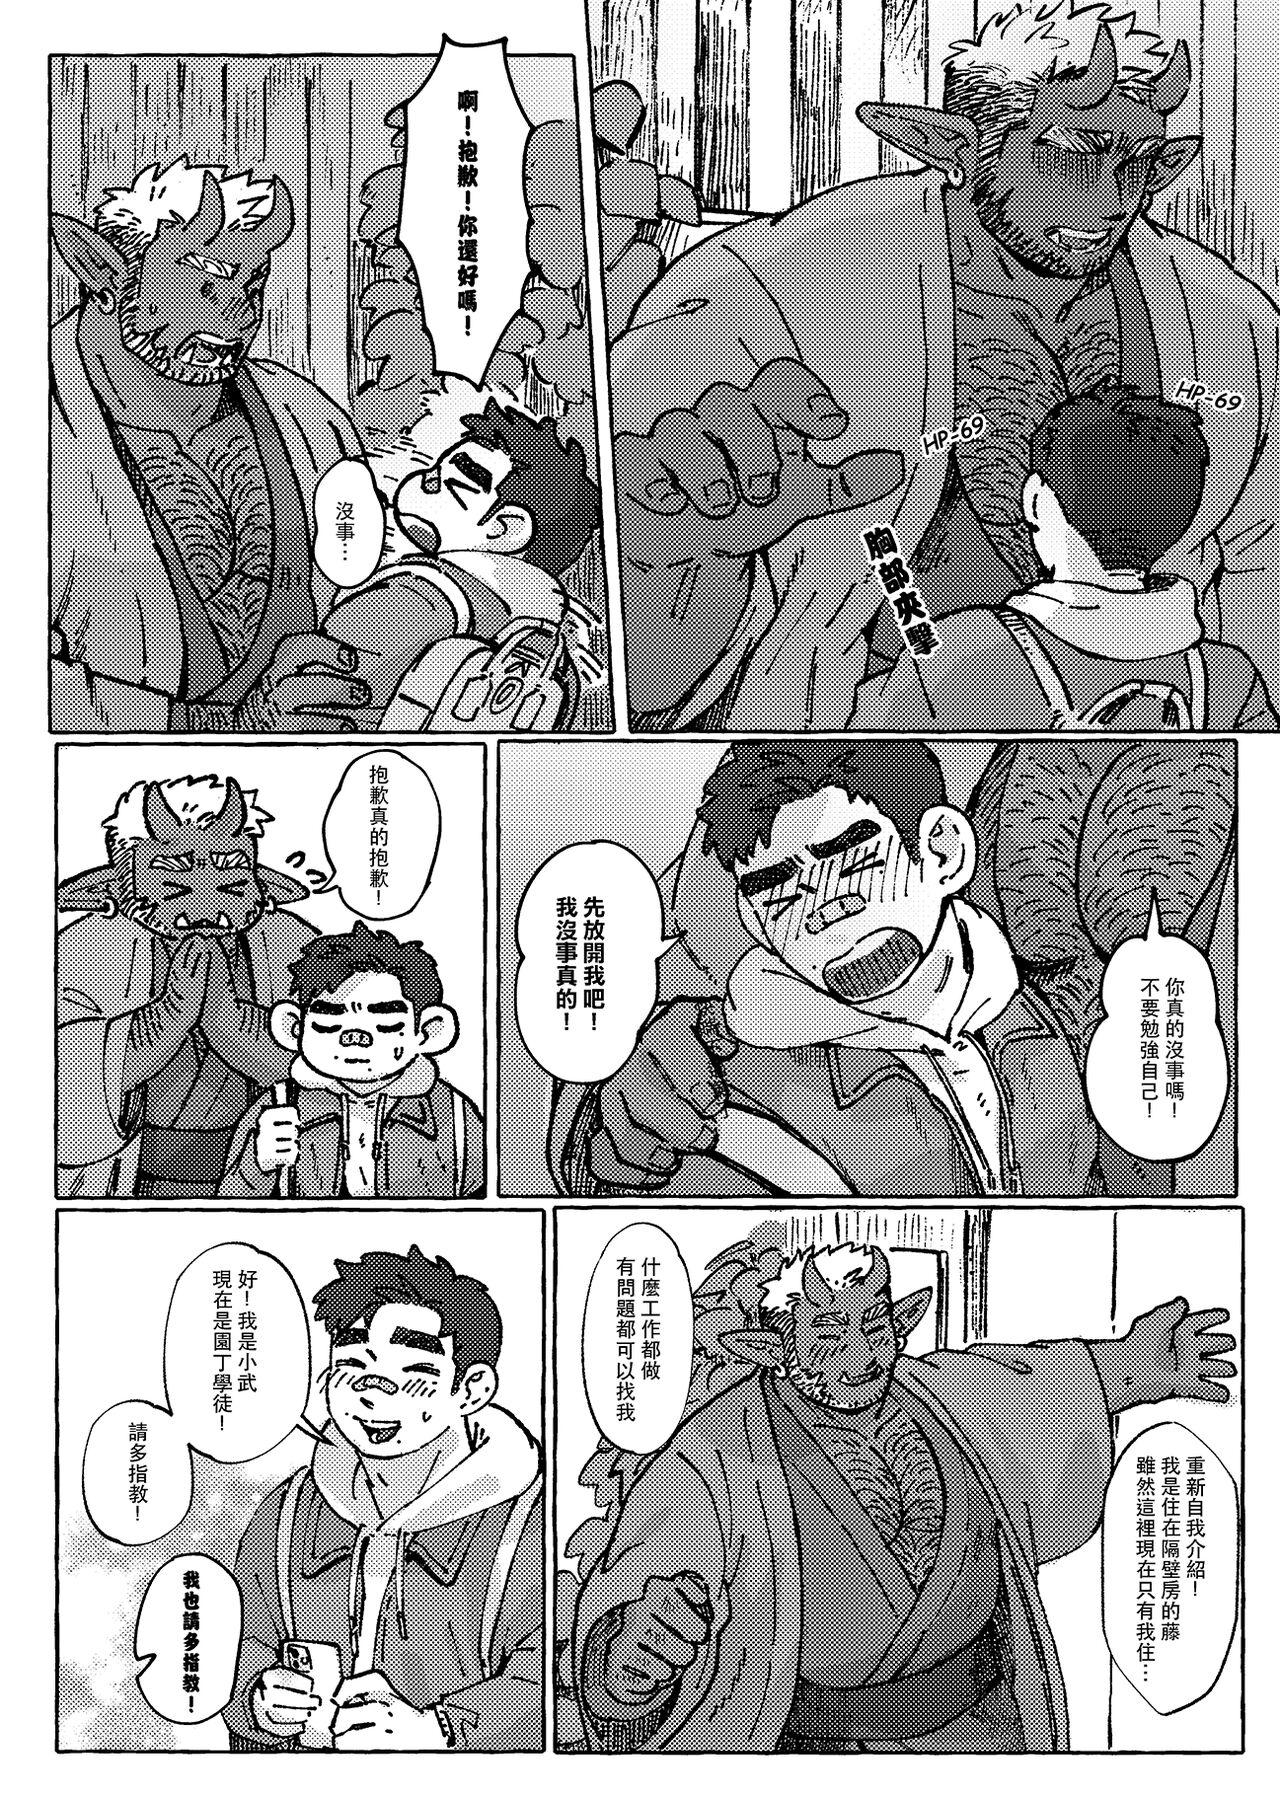 Cbt Shanshan Kuo - The Fuji! Full Book (Chinese Version) 松竹梅與藤｜繁中全書 Gay Broken - Page 5